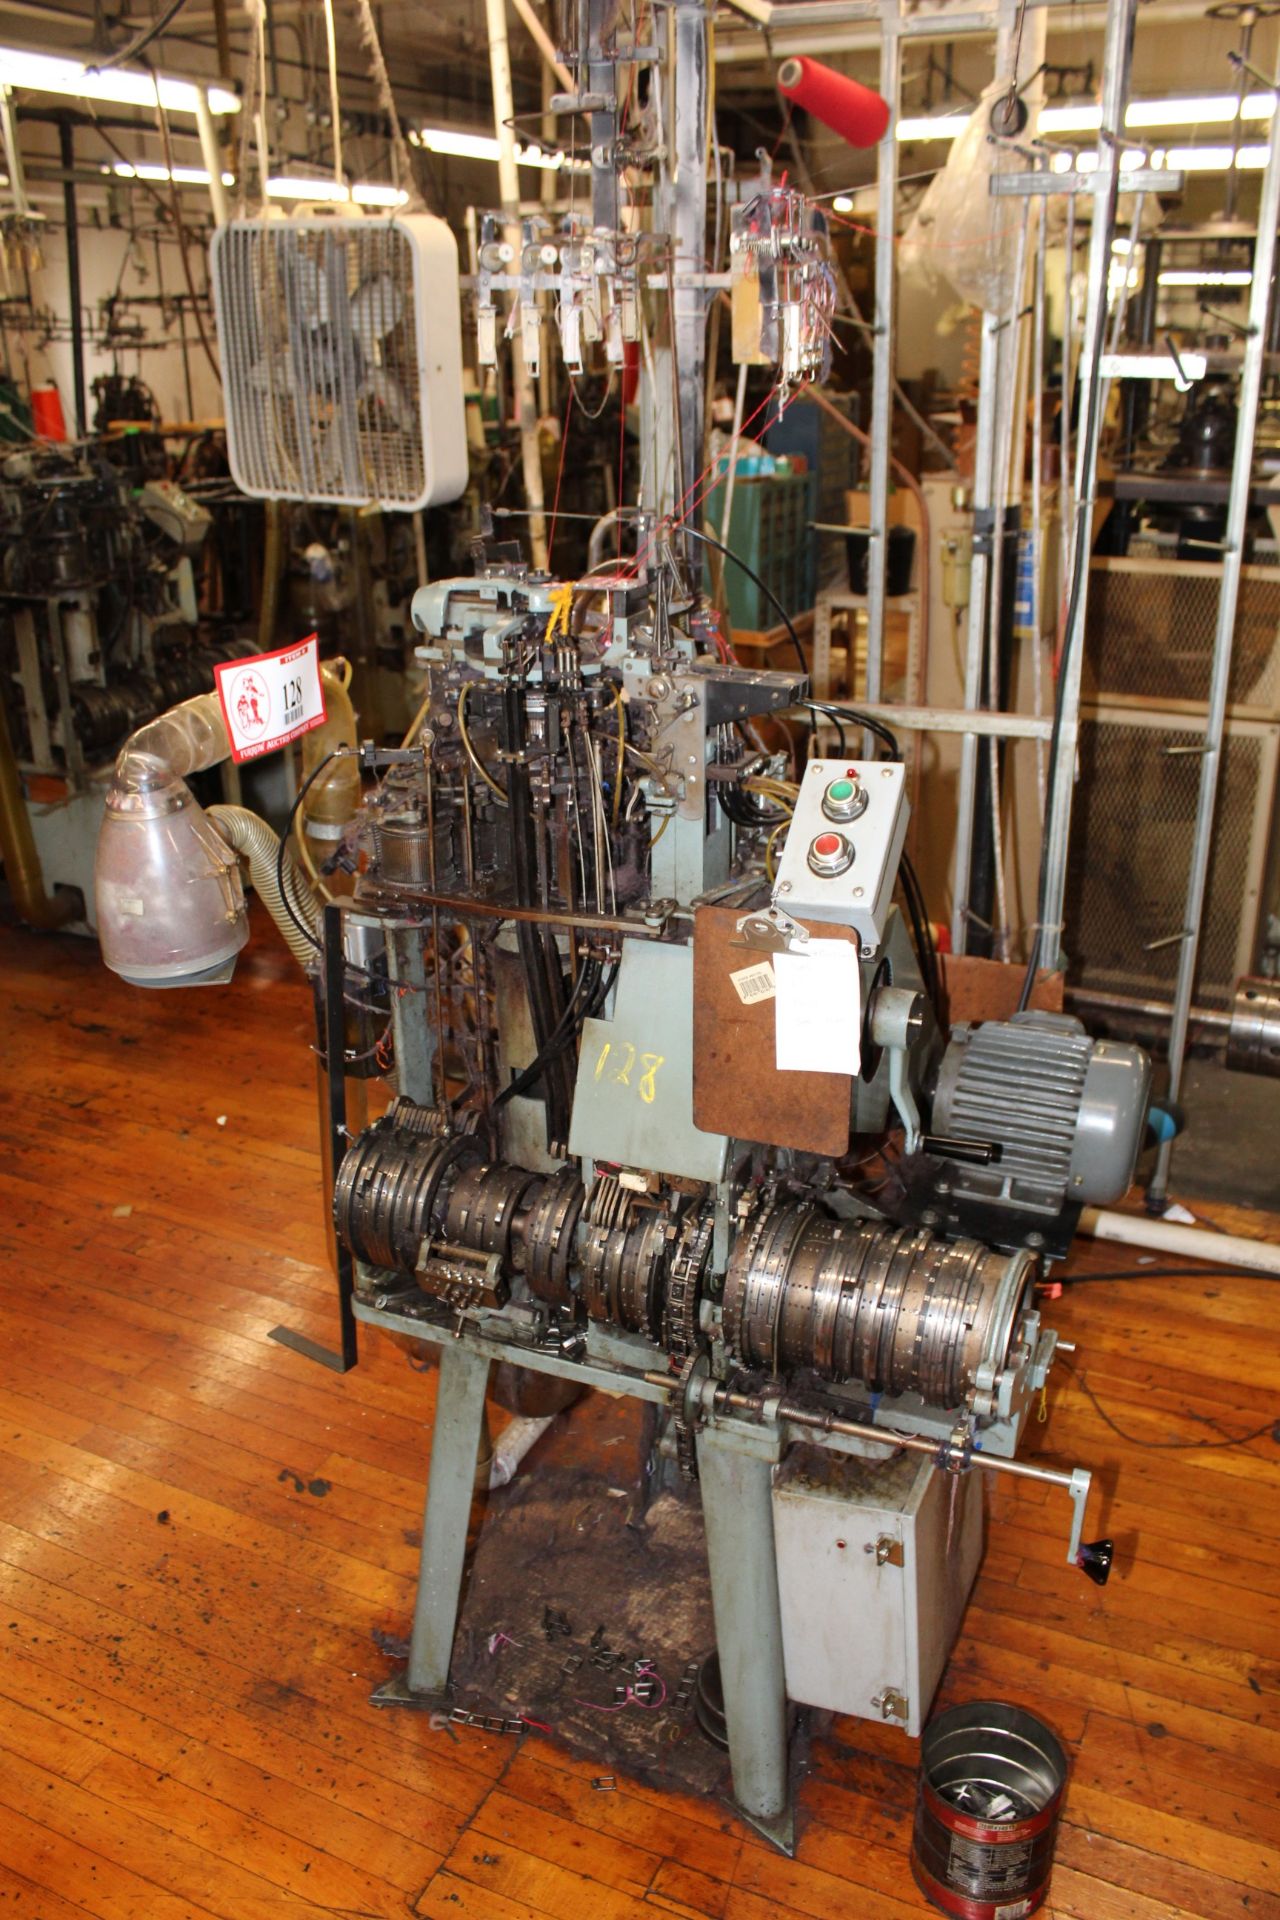 Speizman Carolina Amy Knitting Machine Model 108N, 3 3/4", Runs